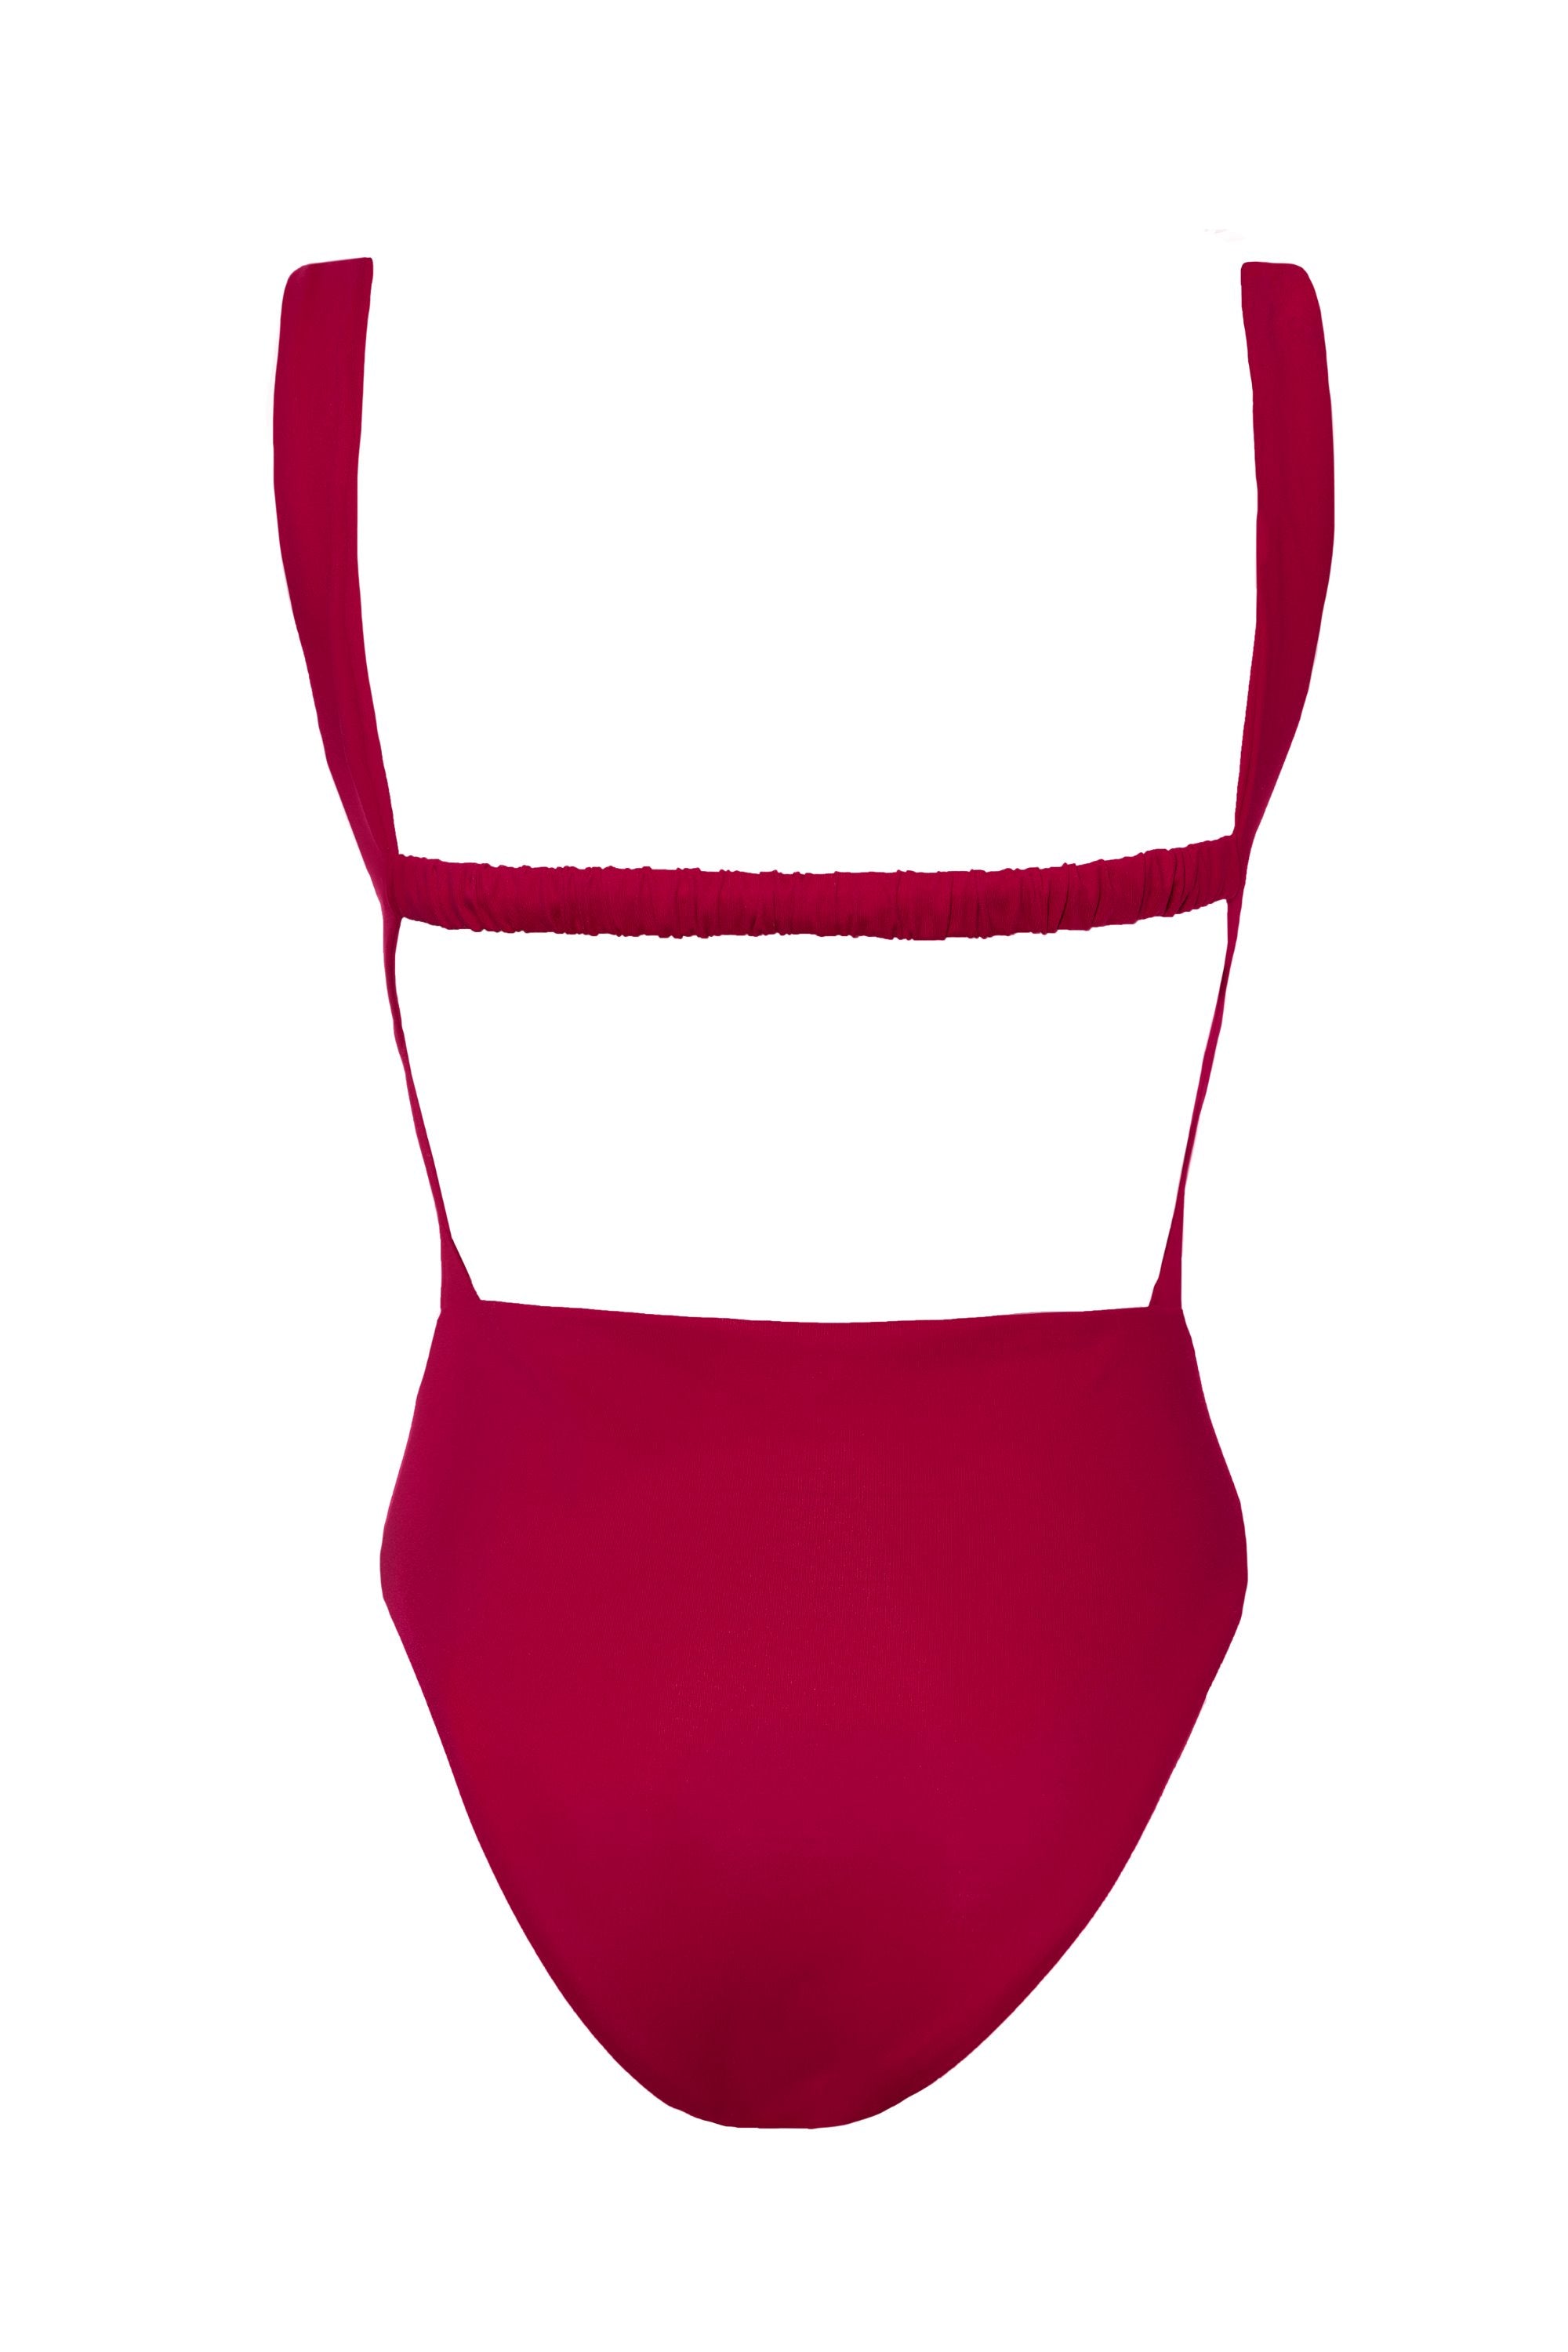 Ines in Bordeaux Red One-Piece Swimsuit Arloe 